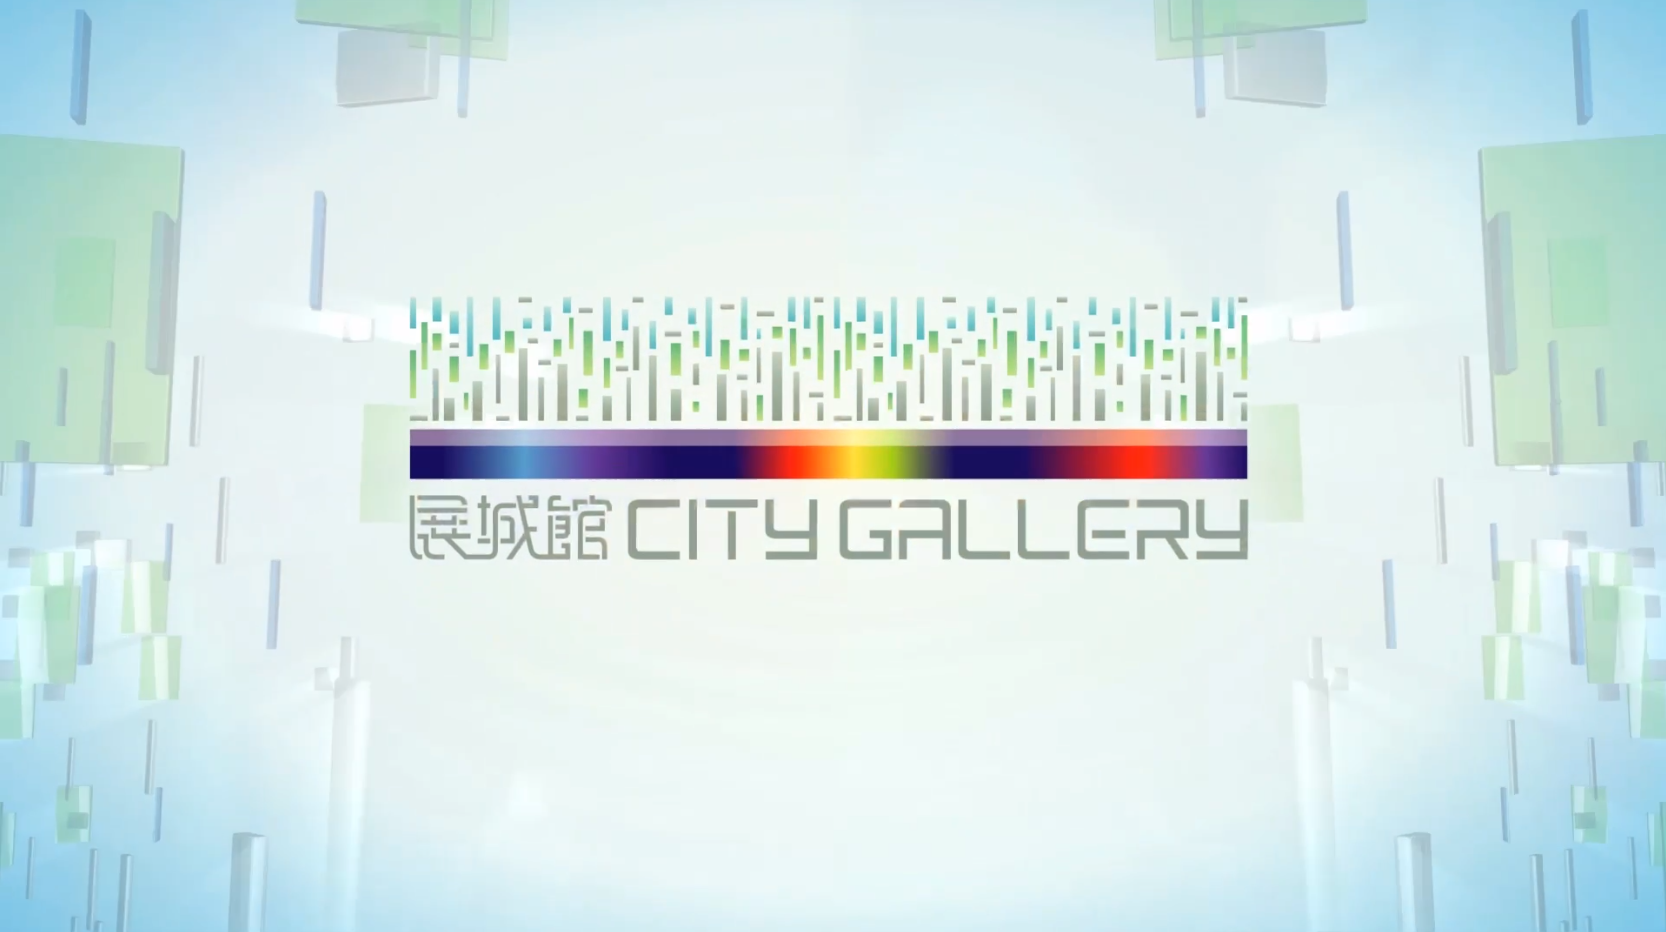 City Gallery Video